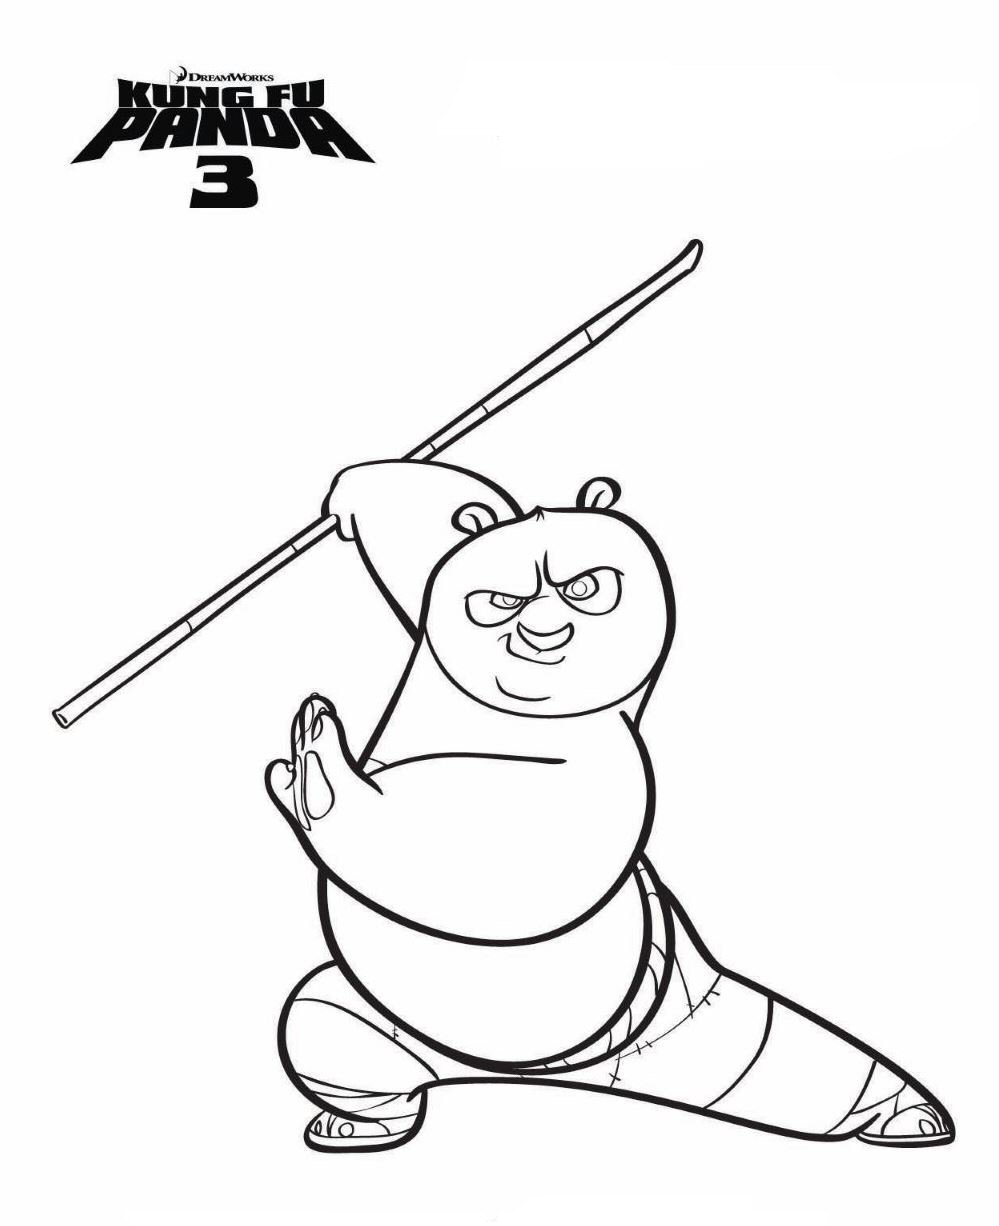 Kung fu panda 3 ausmalbilder